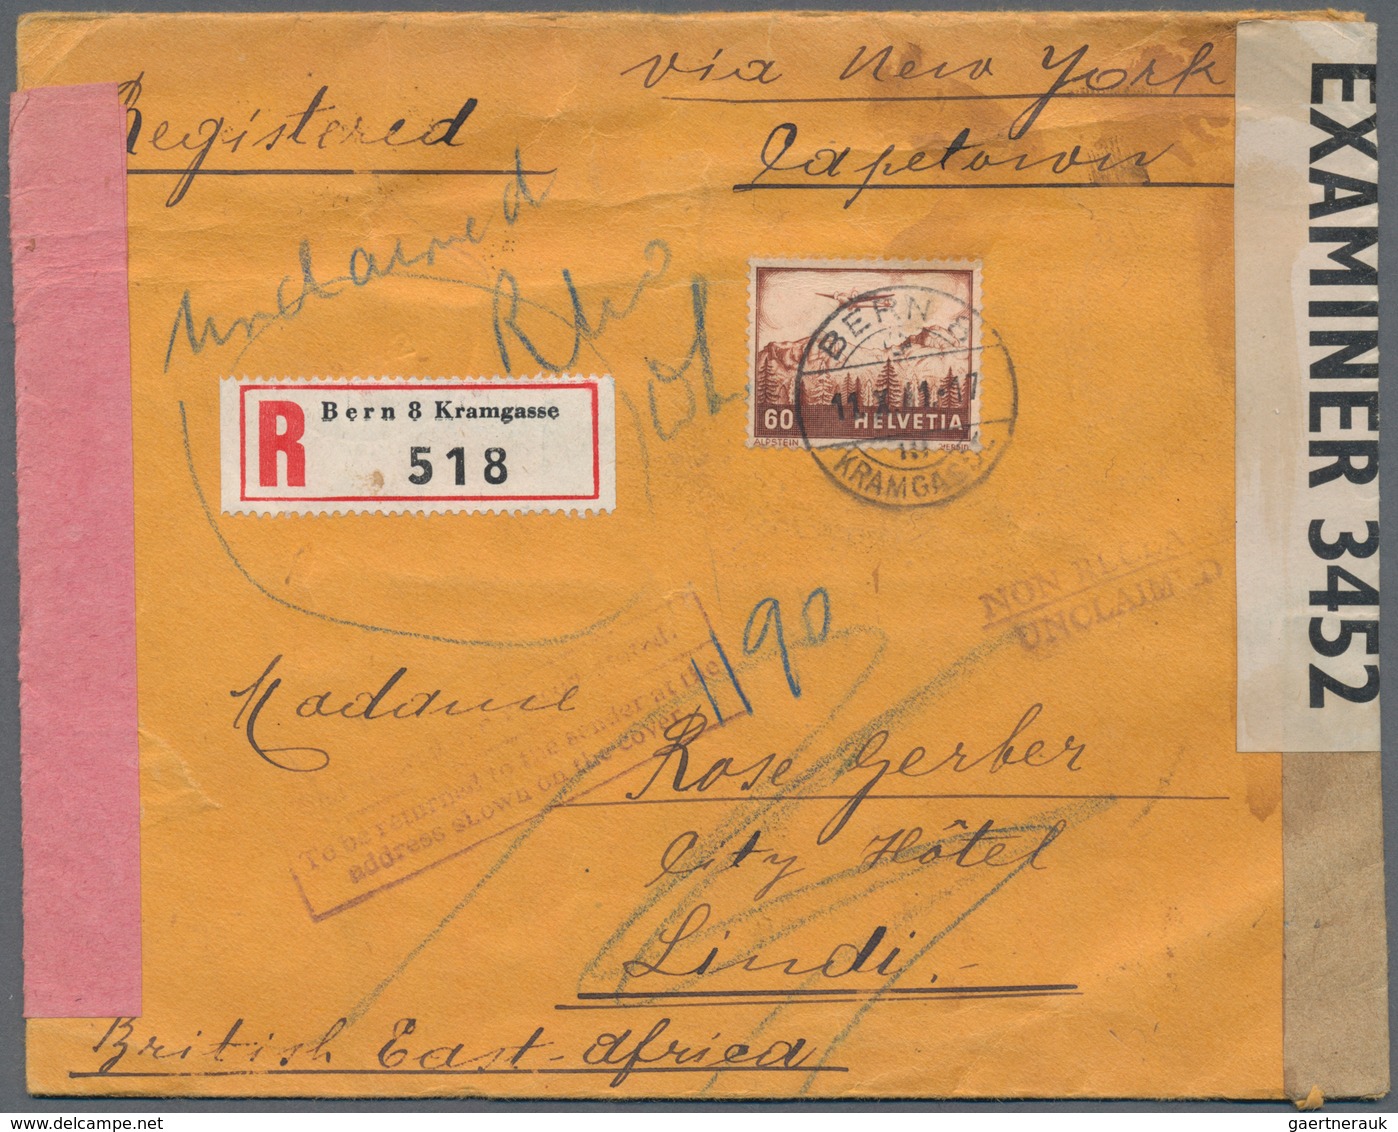 Britisch-Ostafrika Und Uganda: 1941. Registered Air Mail Envelope Written From Switzerland Addressed - Protectoraten Van Oost-Afrika En Van Oeganda